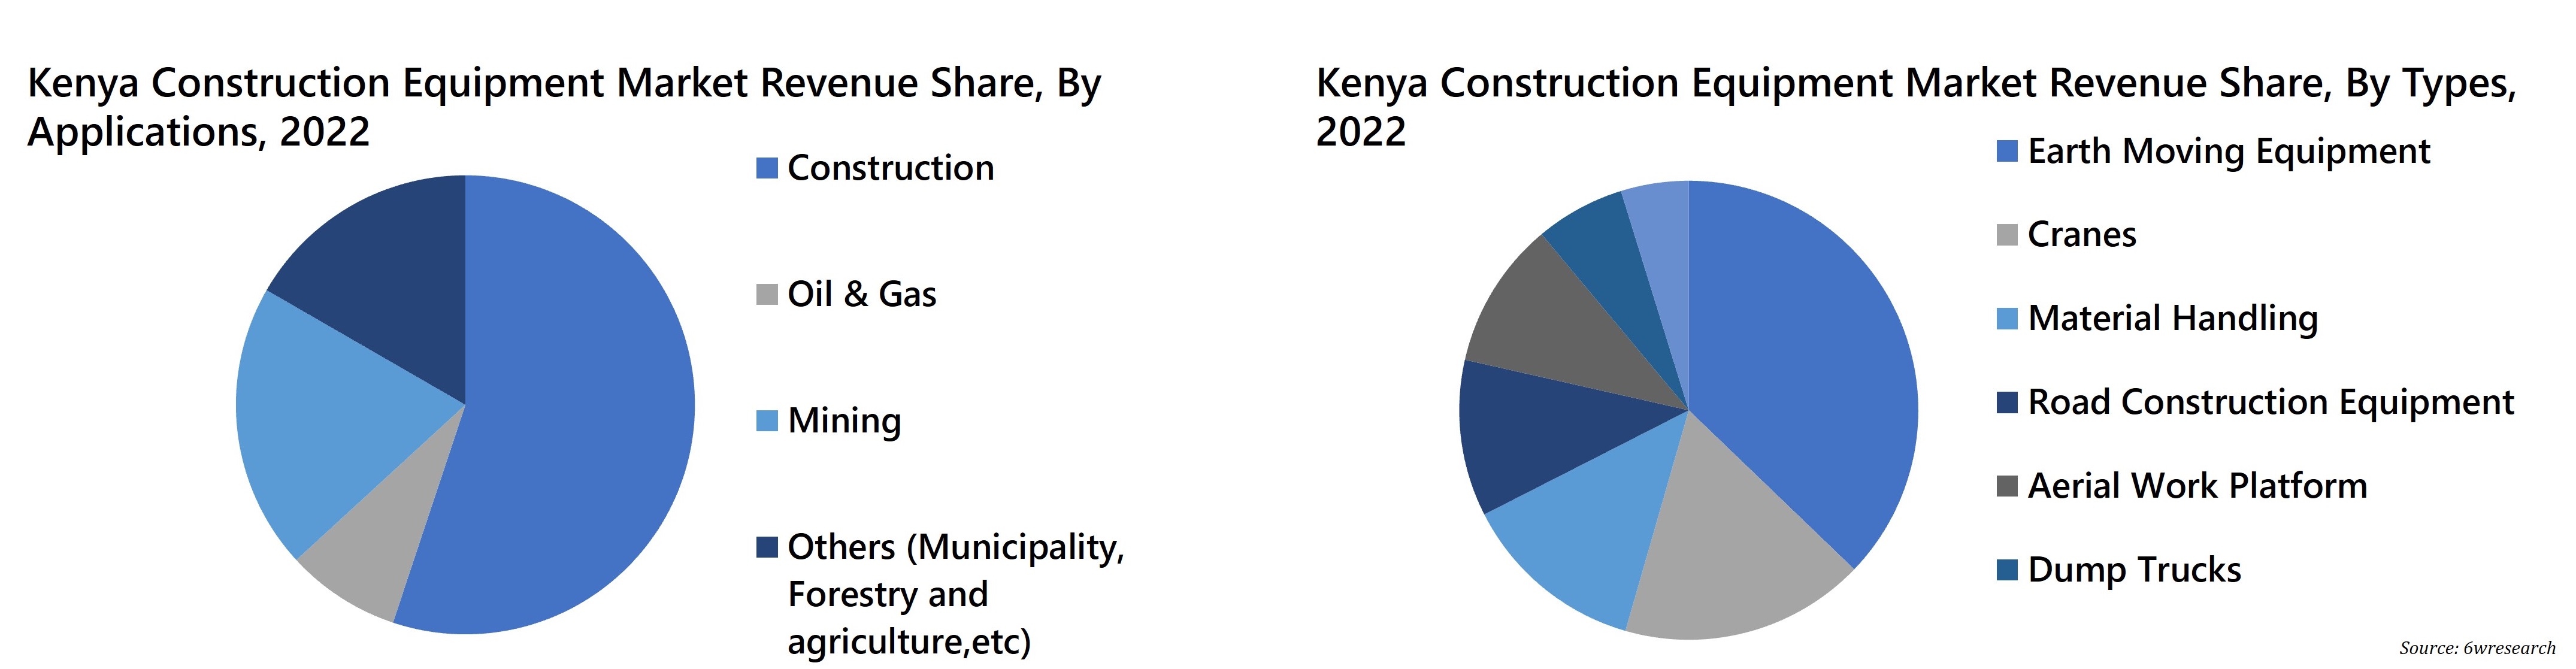 Kenya Construction Equipment Market Revenue Share